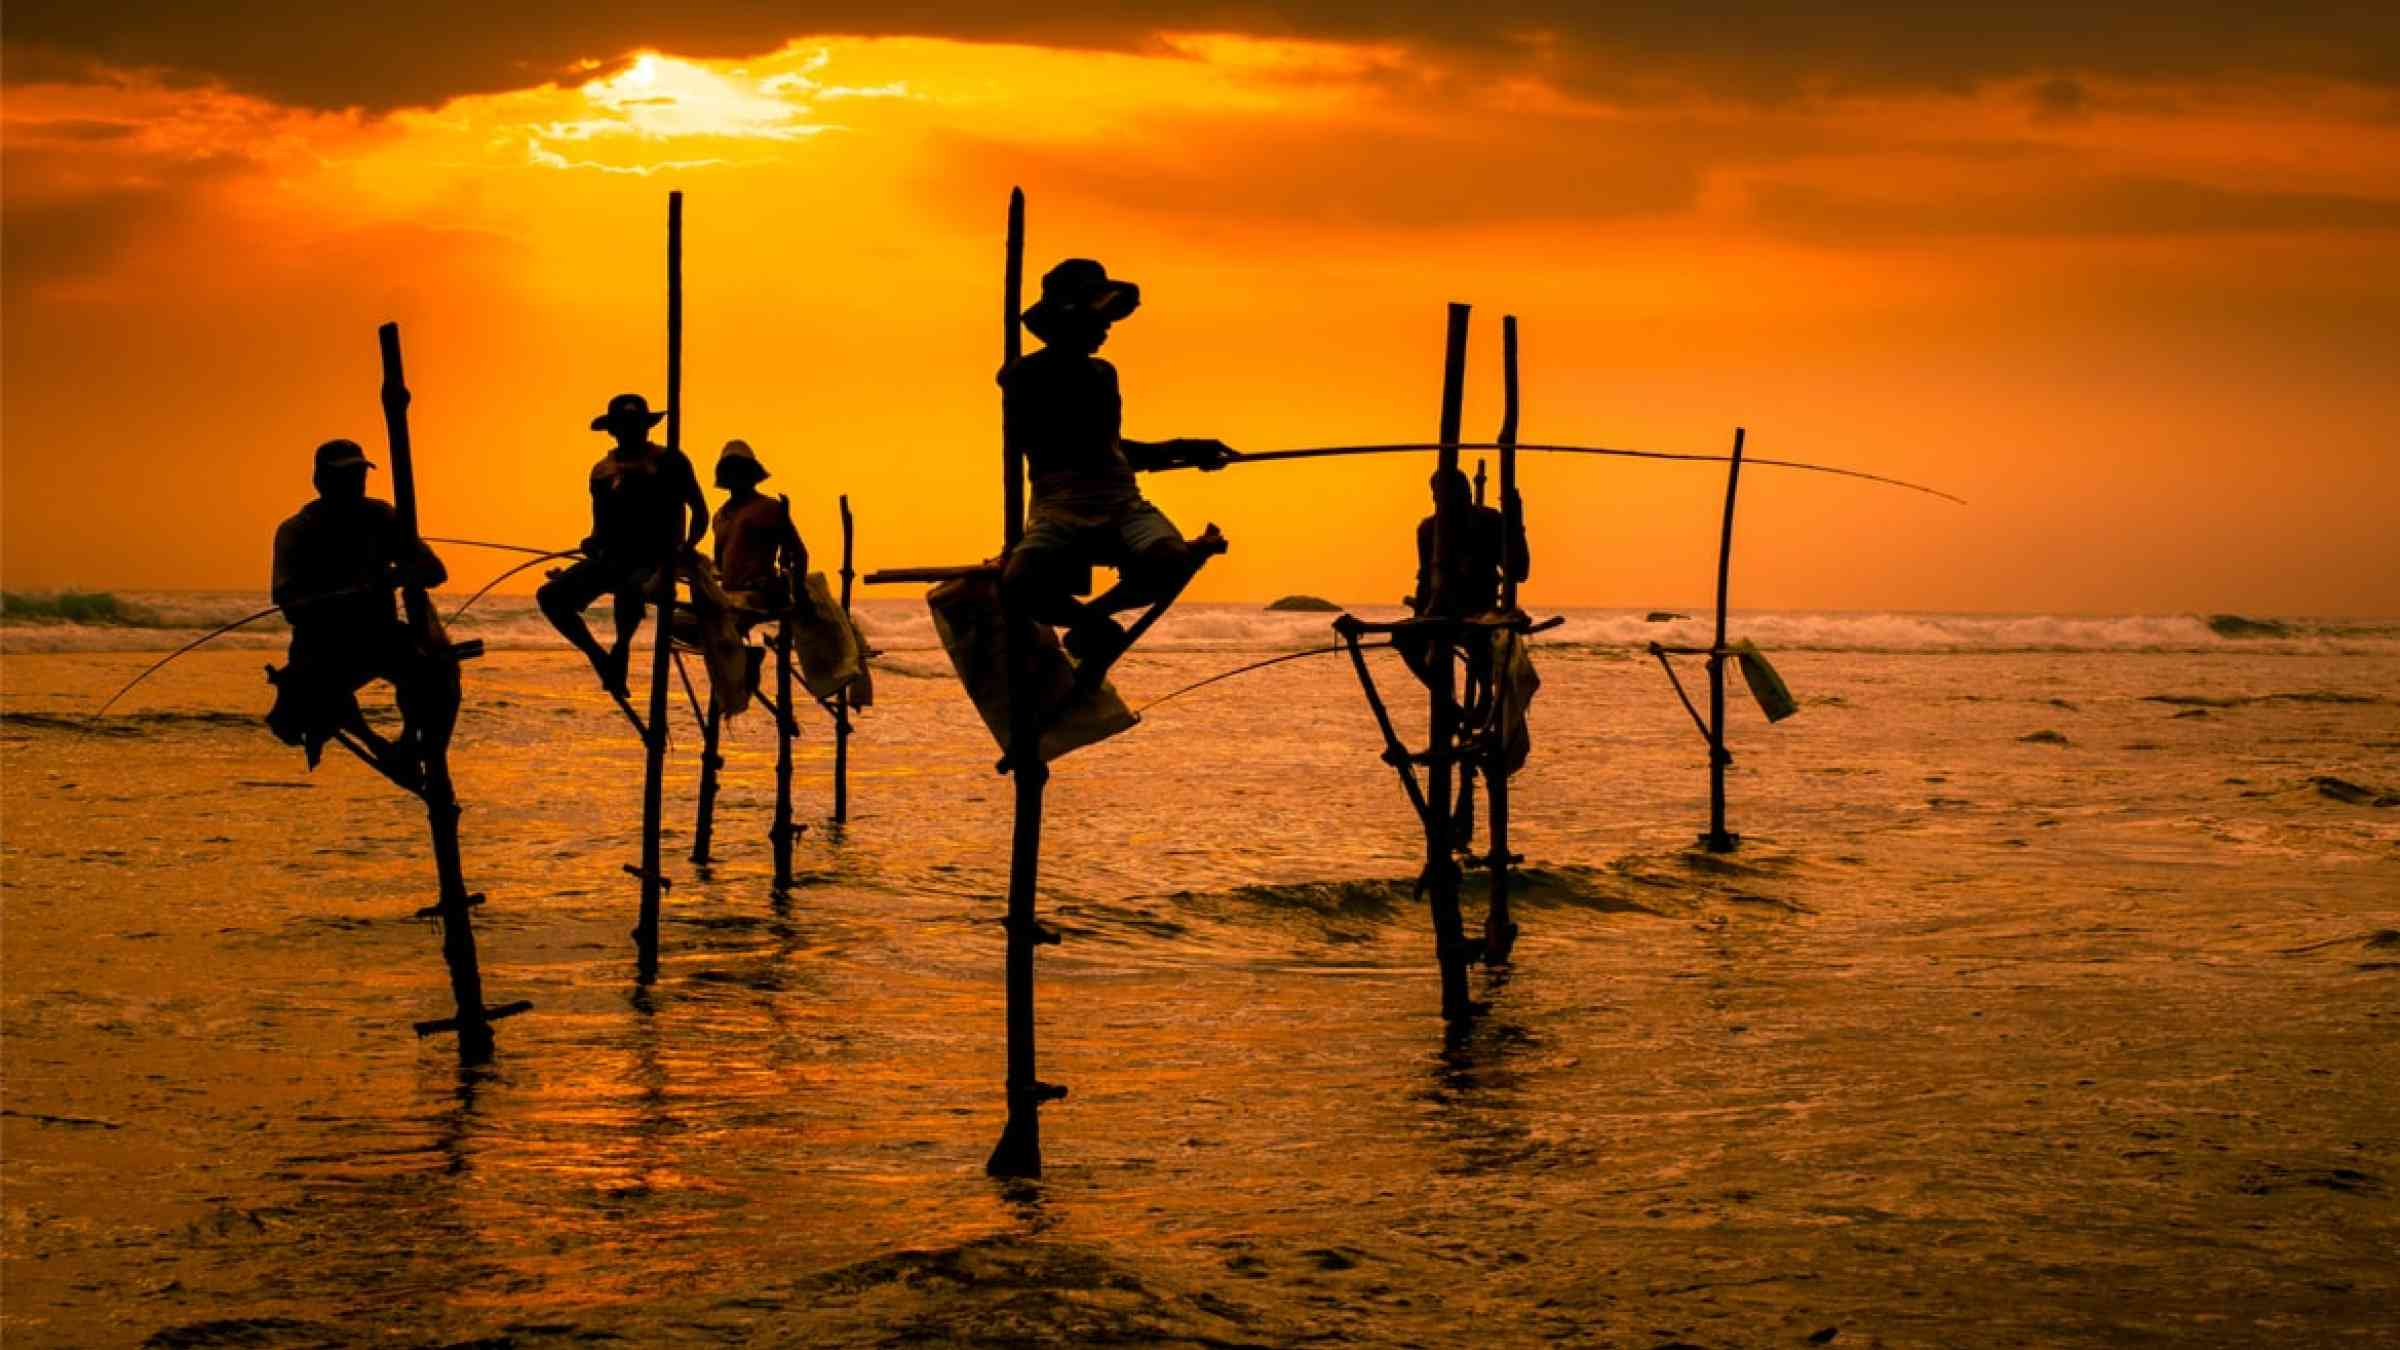 Silhouettes of fishermen in the sea, Sri Lanka